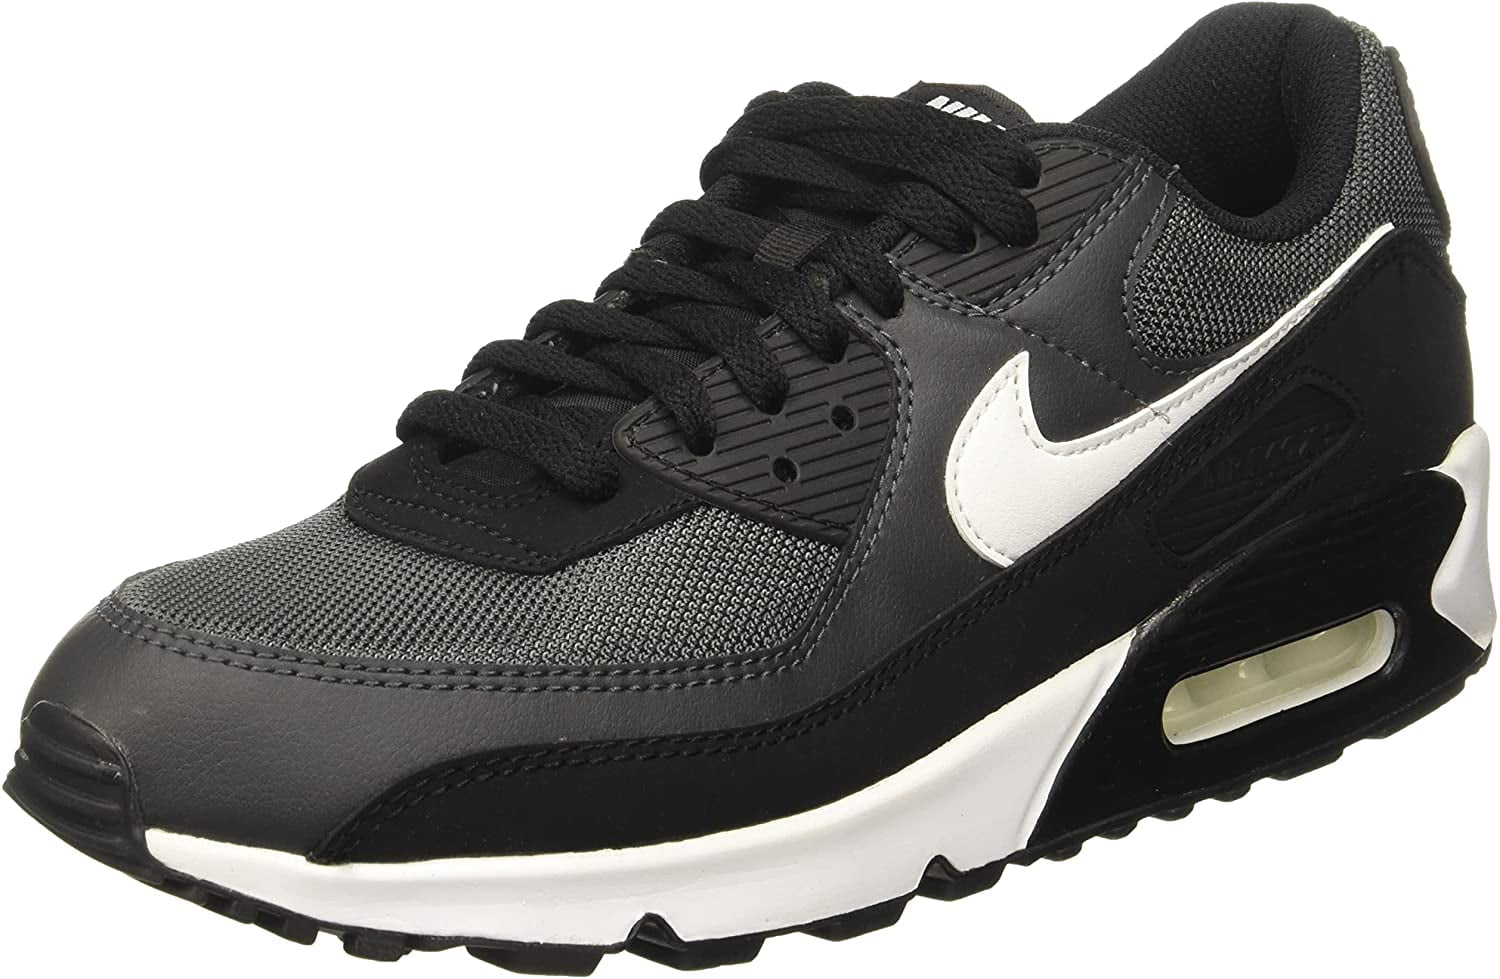 Nike Mens Running Shoe, Iron Grey Dk Smoke Grey Black, 12.5 - Walmart.com